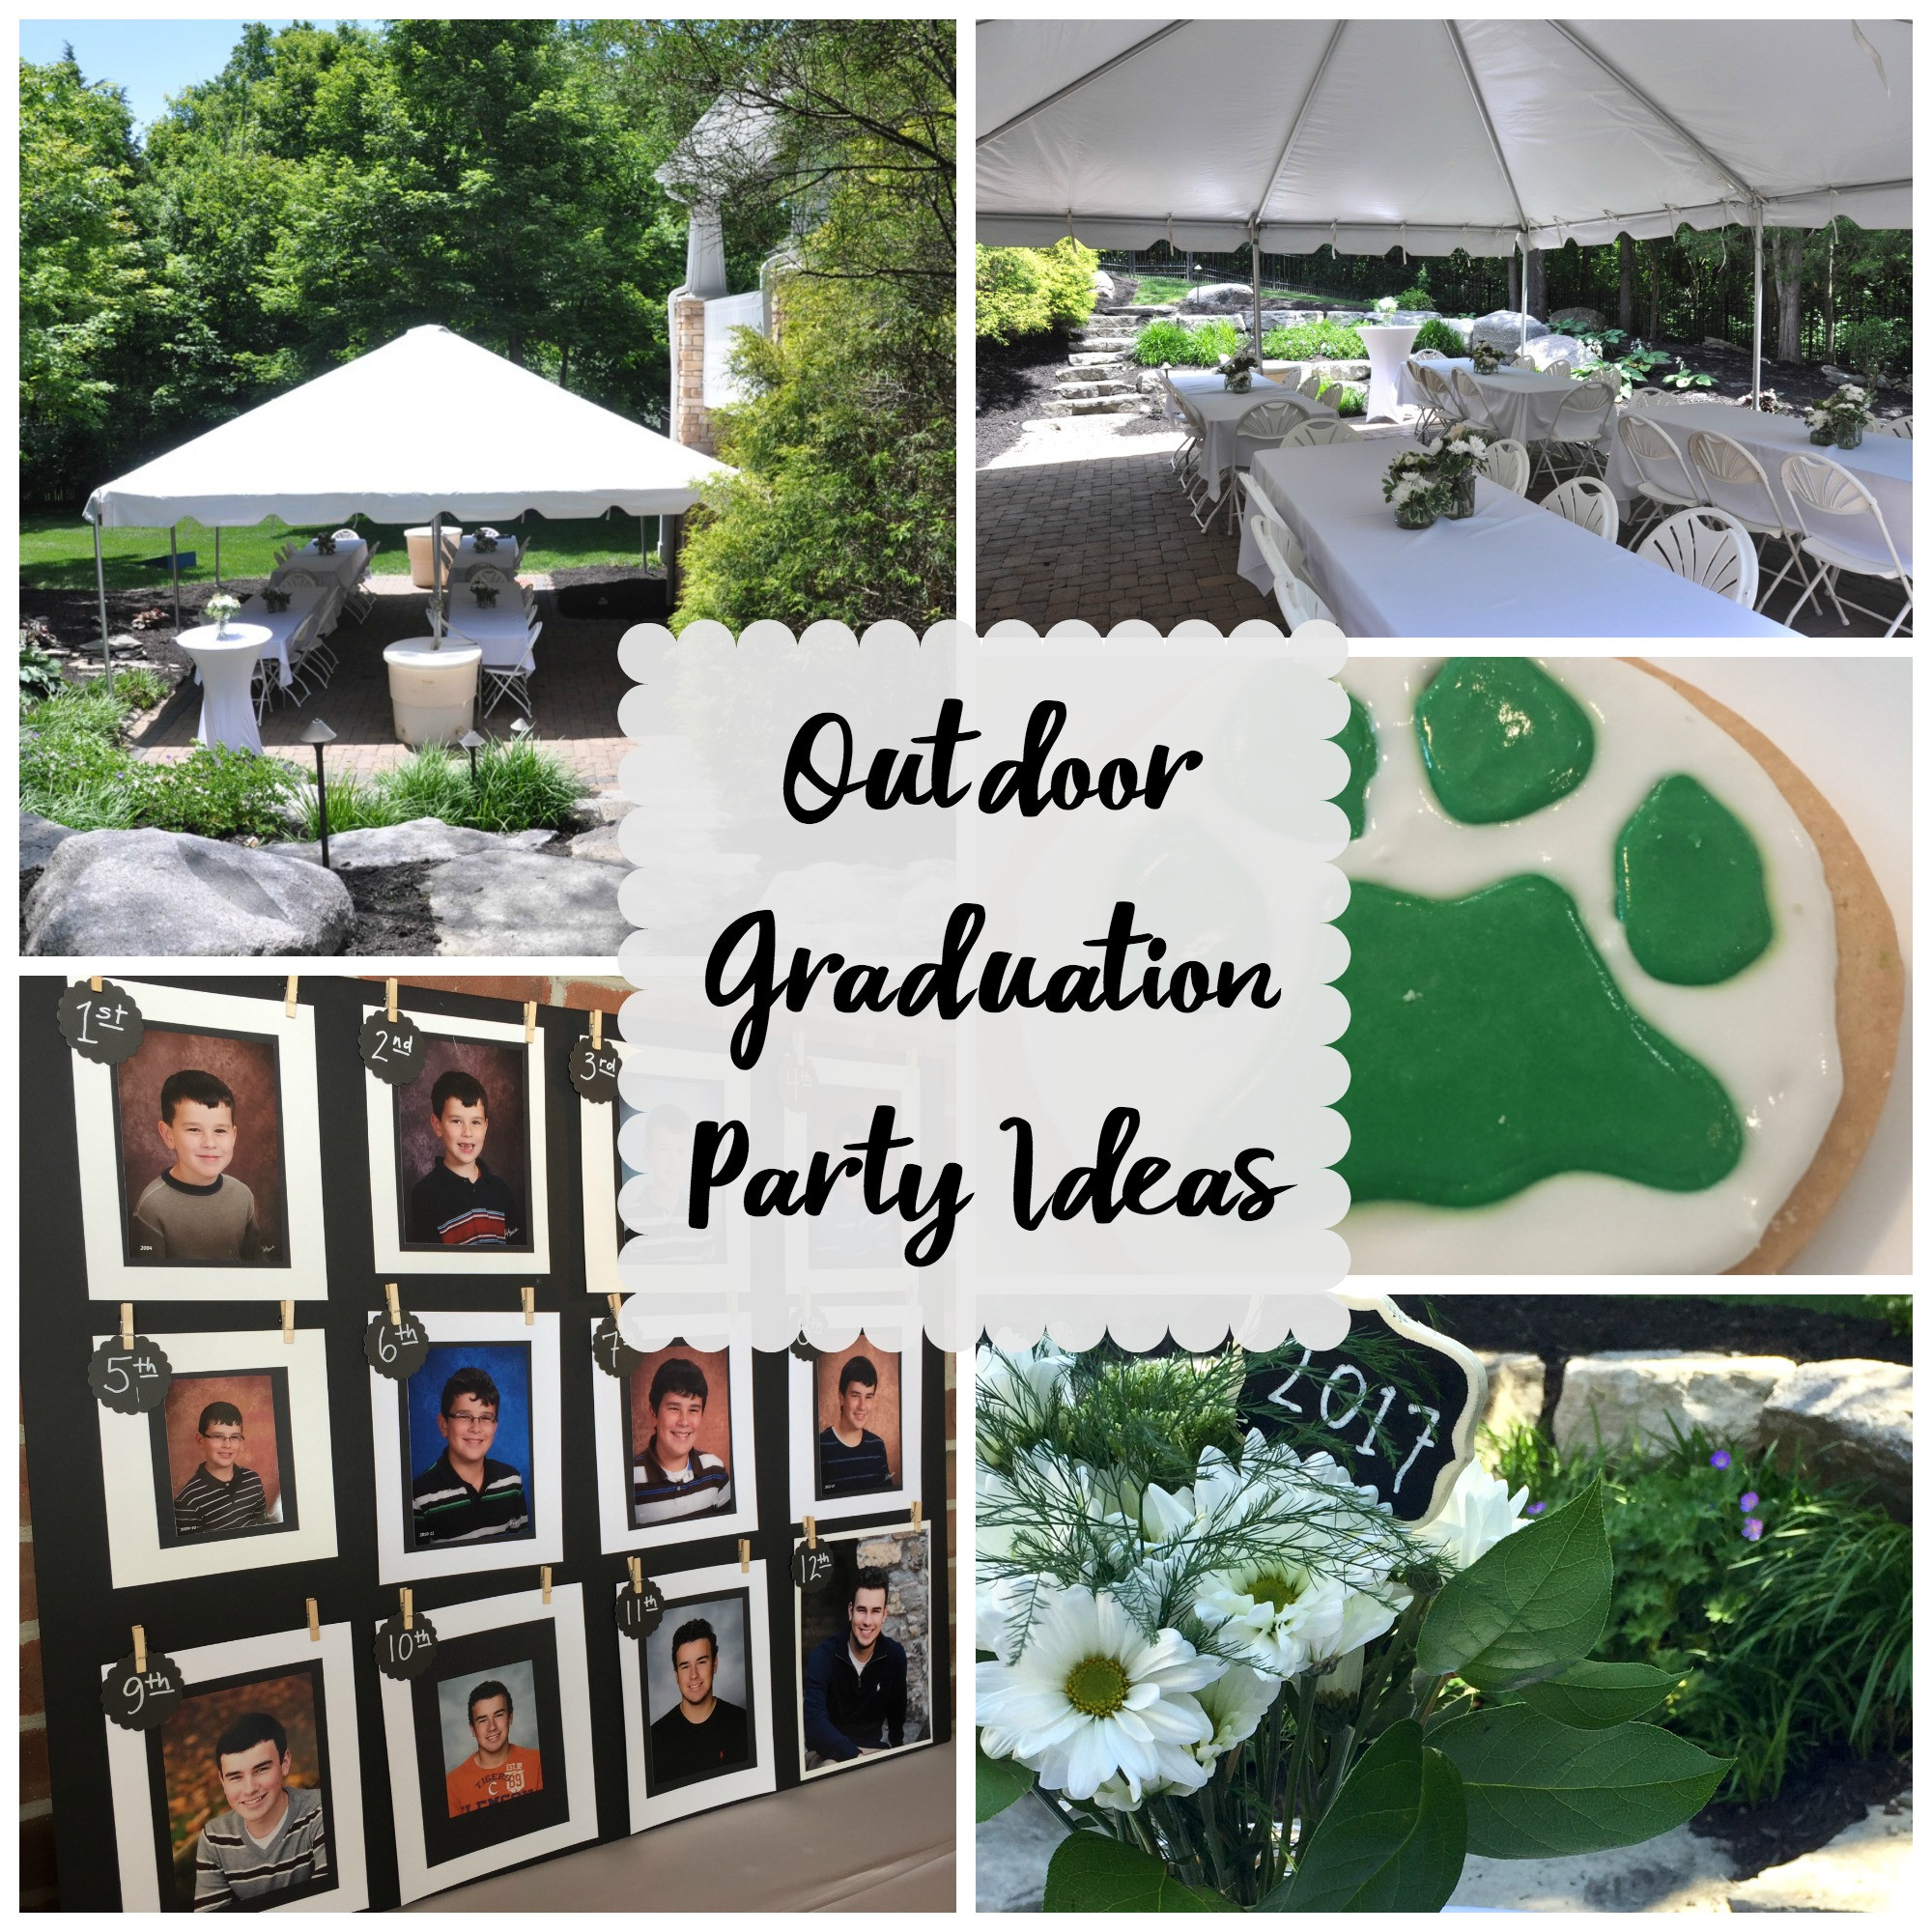 High School Graduation Party Ideas
 Outdoor Graduation Party Evolution of Style